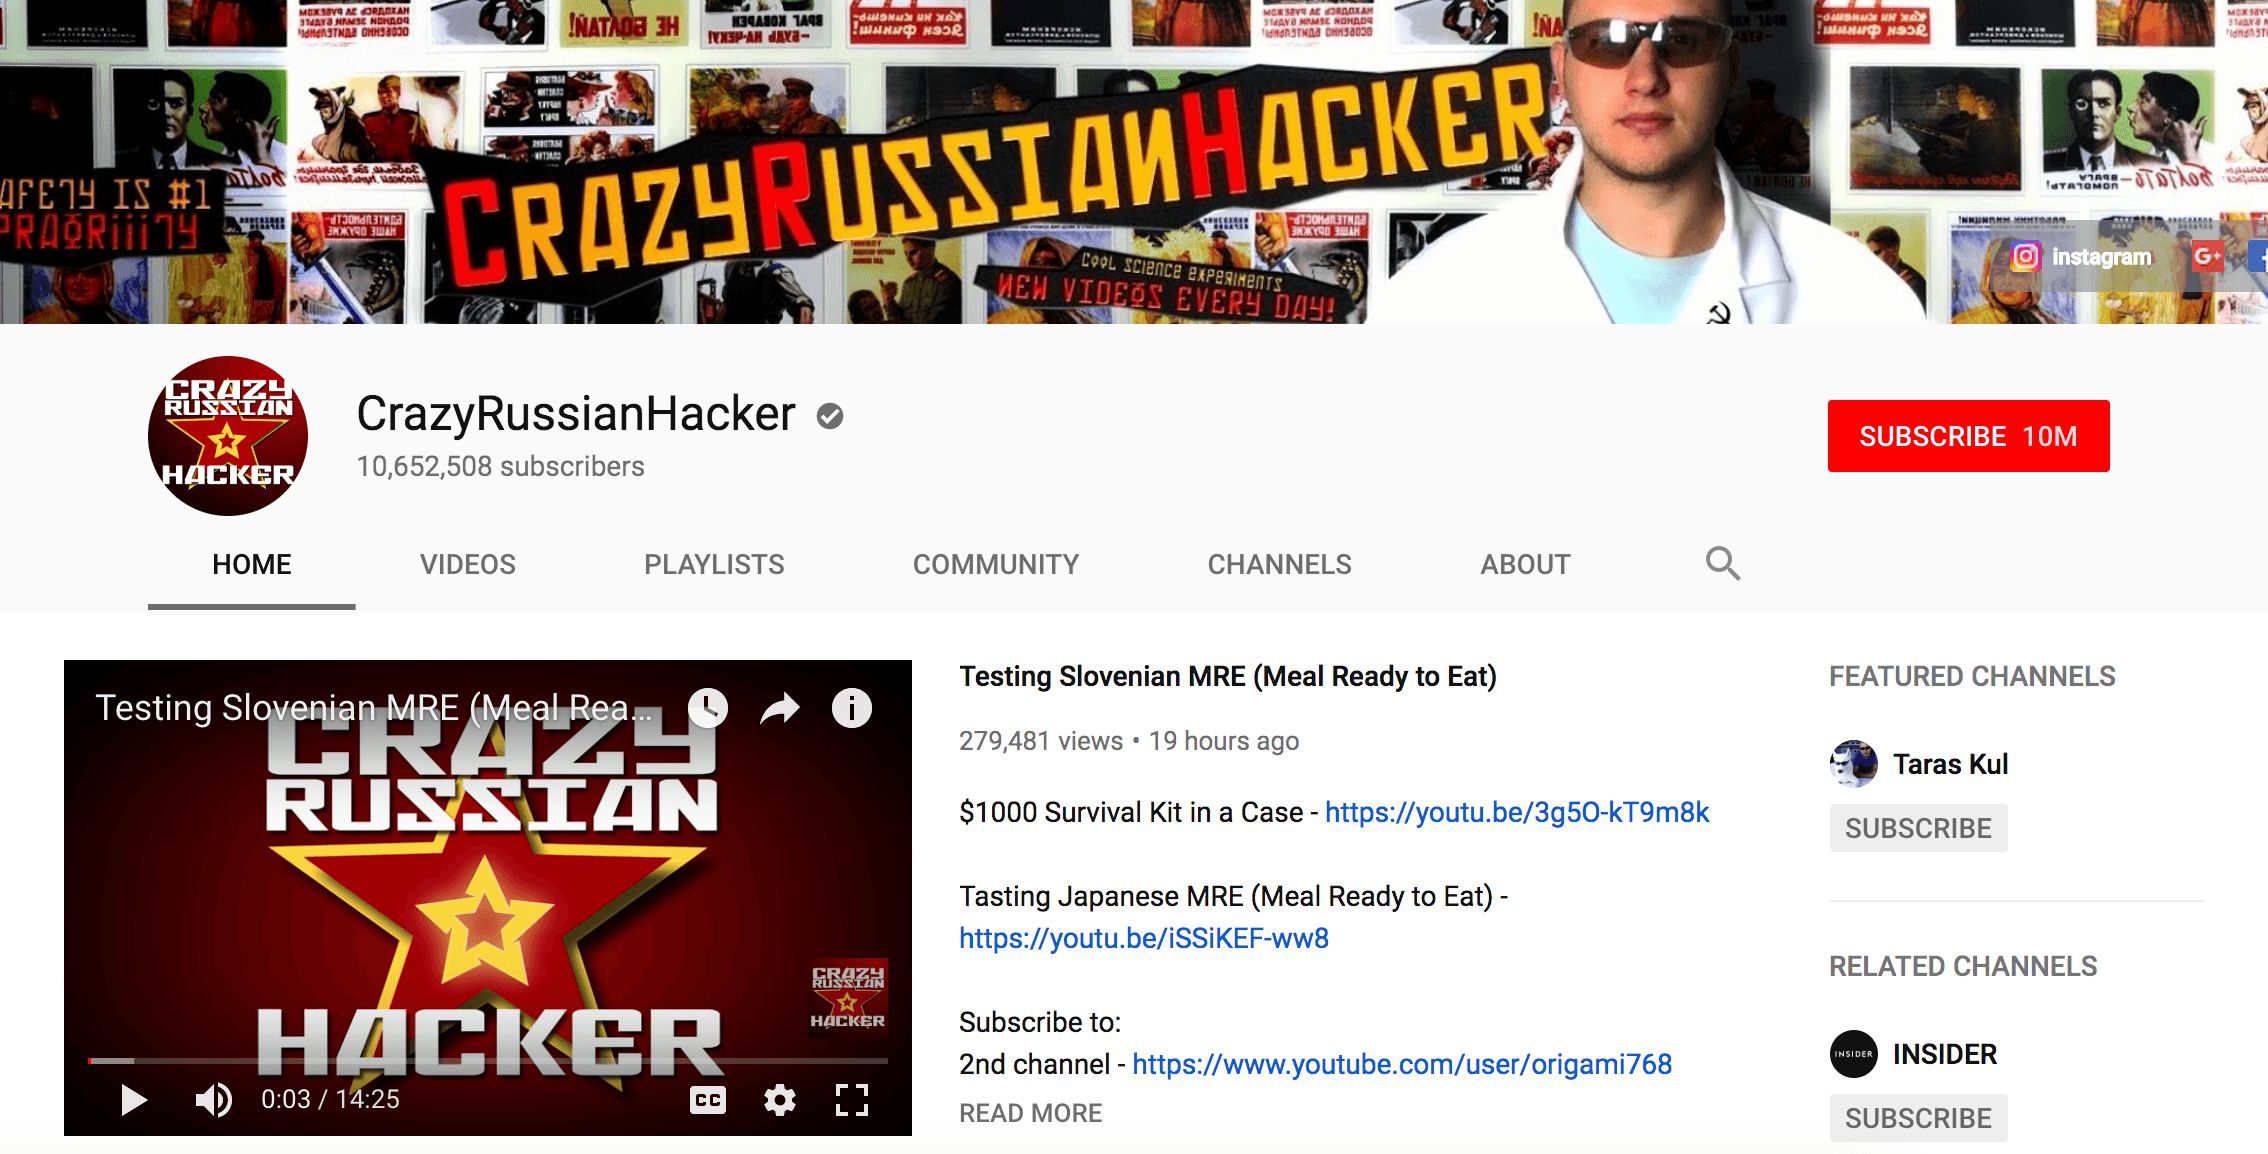 Crazy Russian Hacker